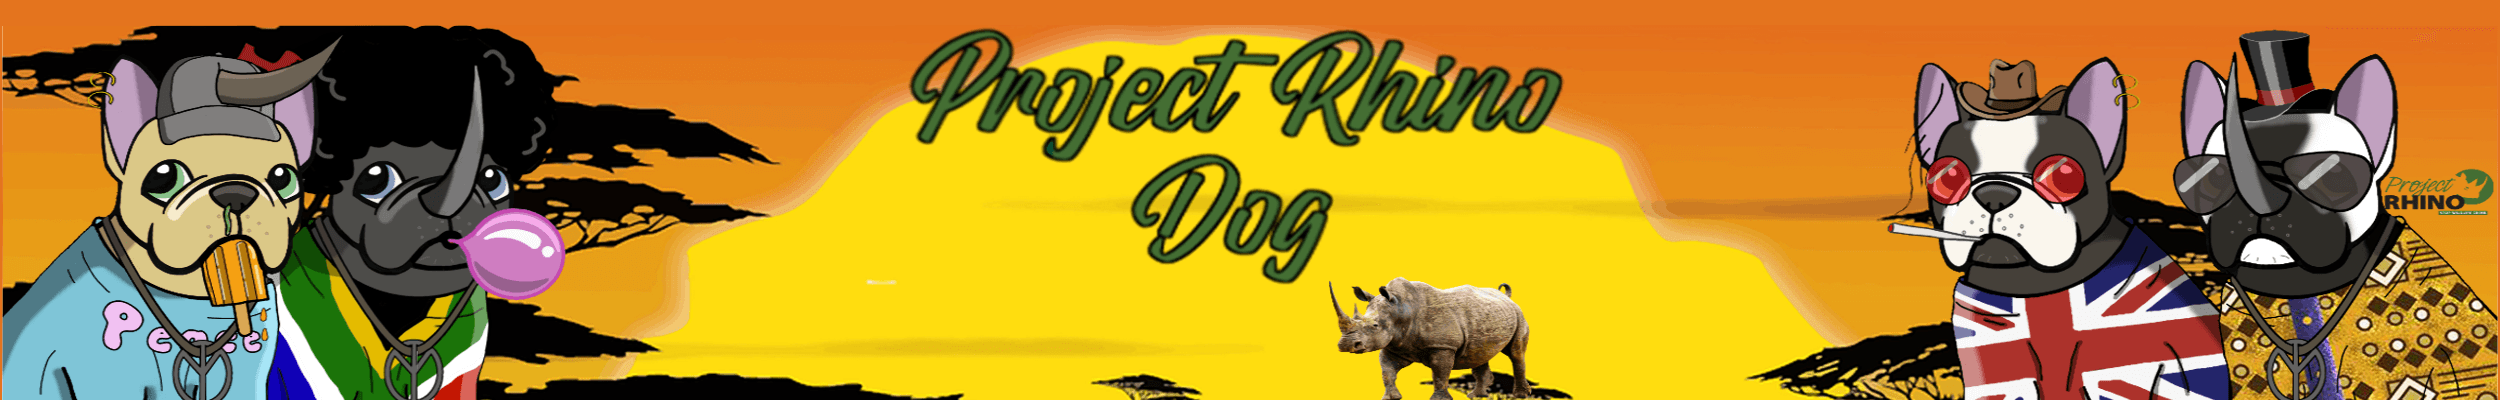 Project_Rhino_Dog banner